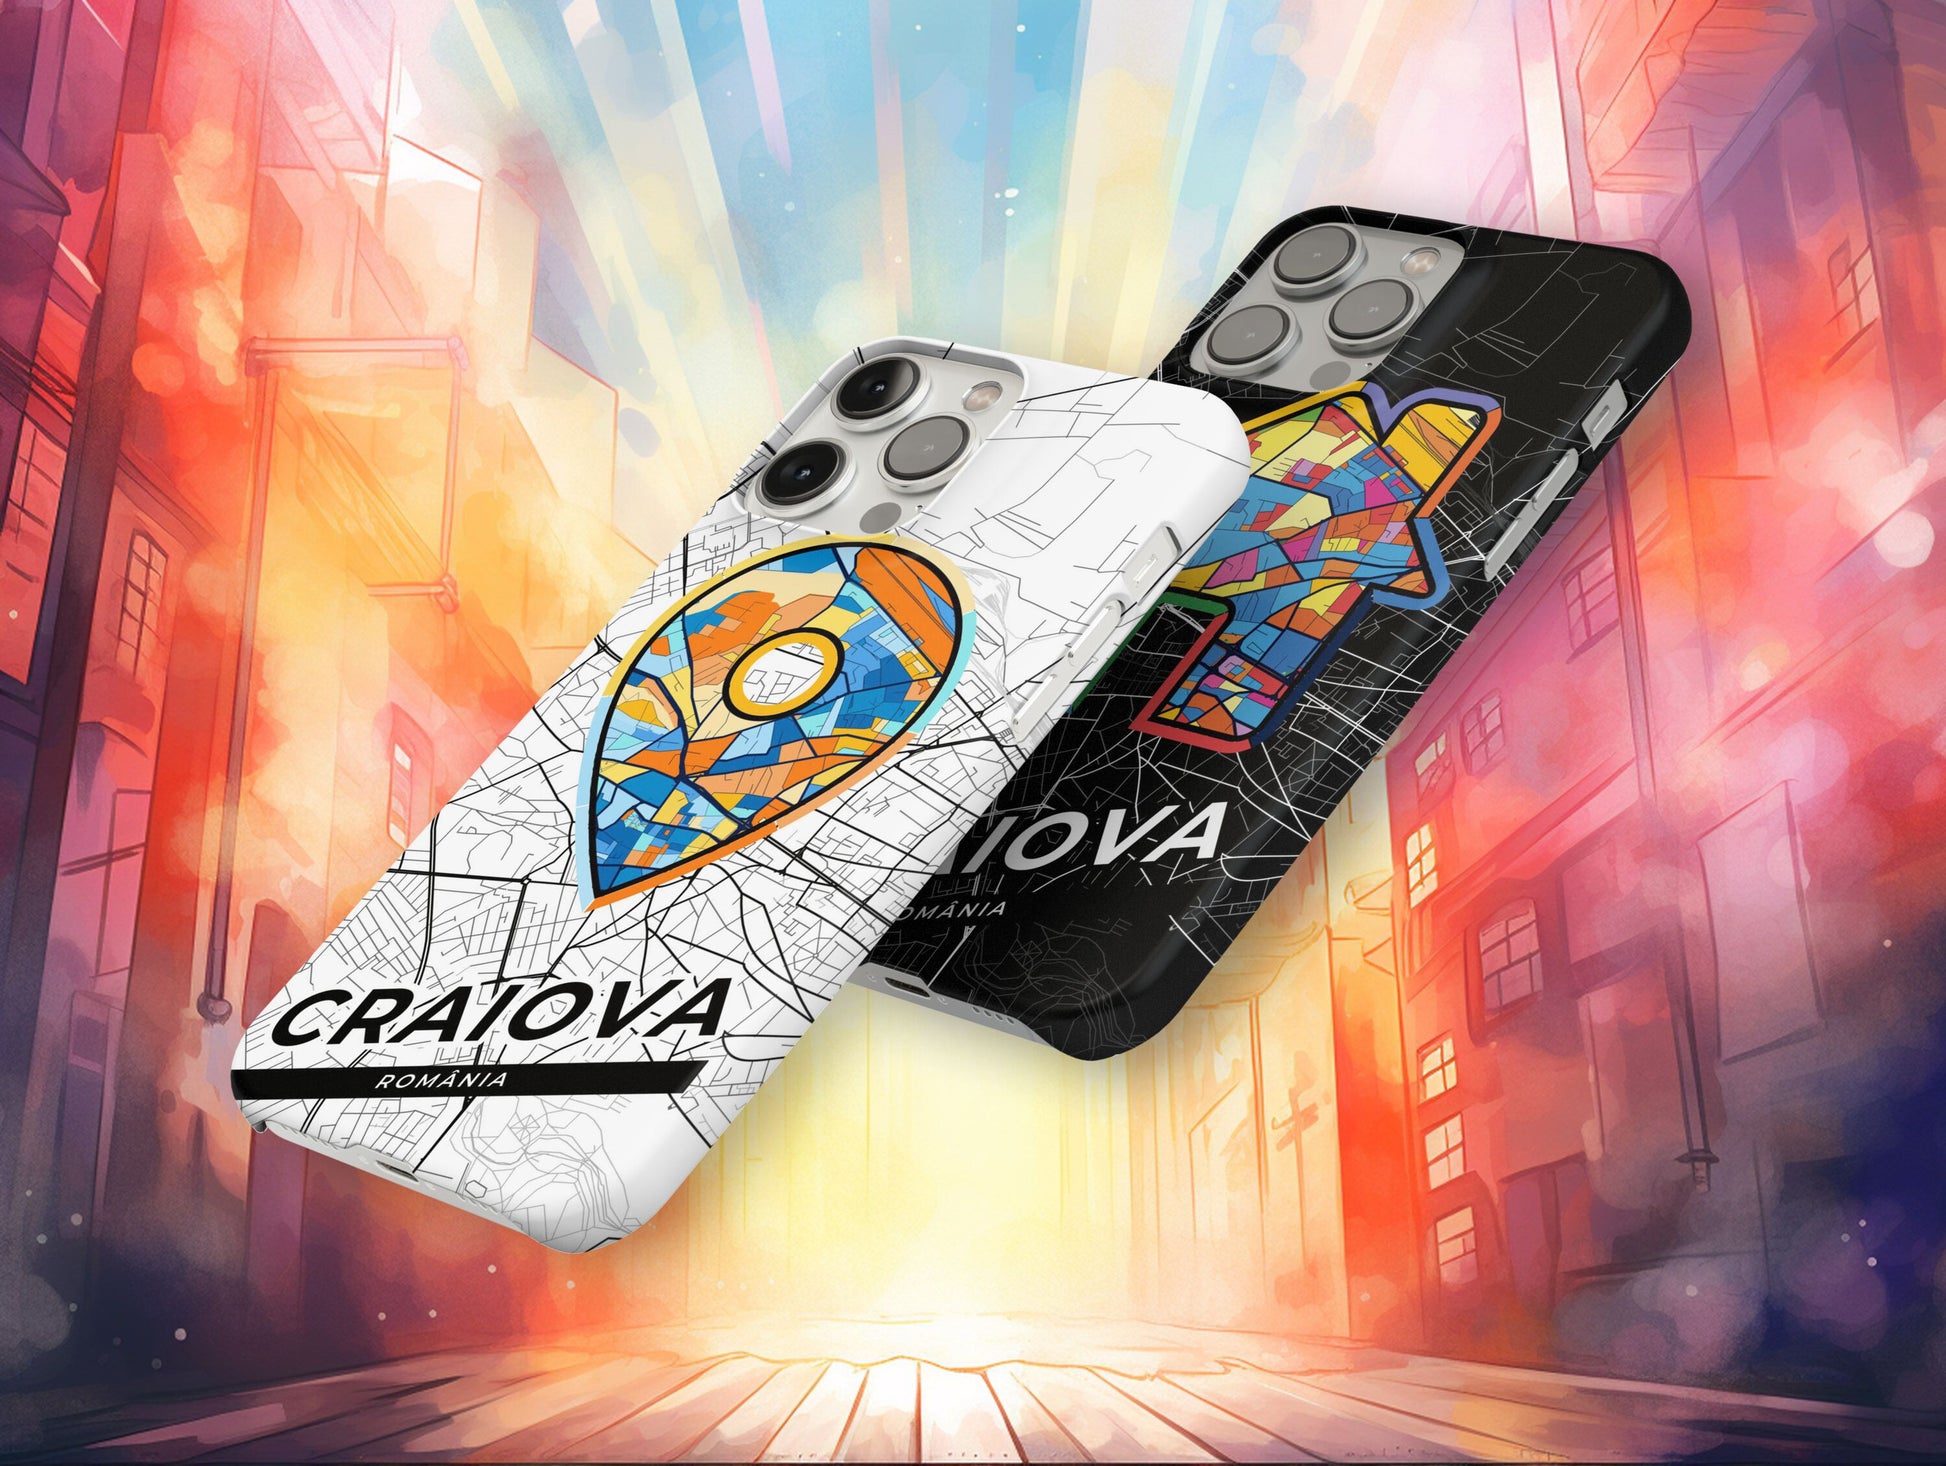 Craiova Romania slim phone case with colorful icon. Birthday, wedding or housewarming gift. Couple match cases.